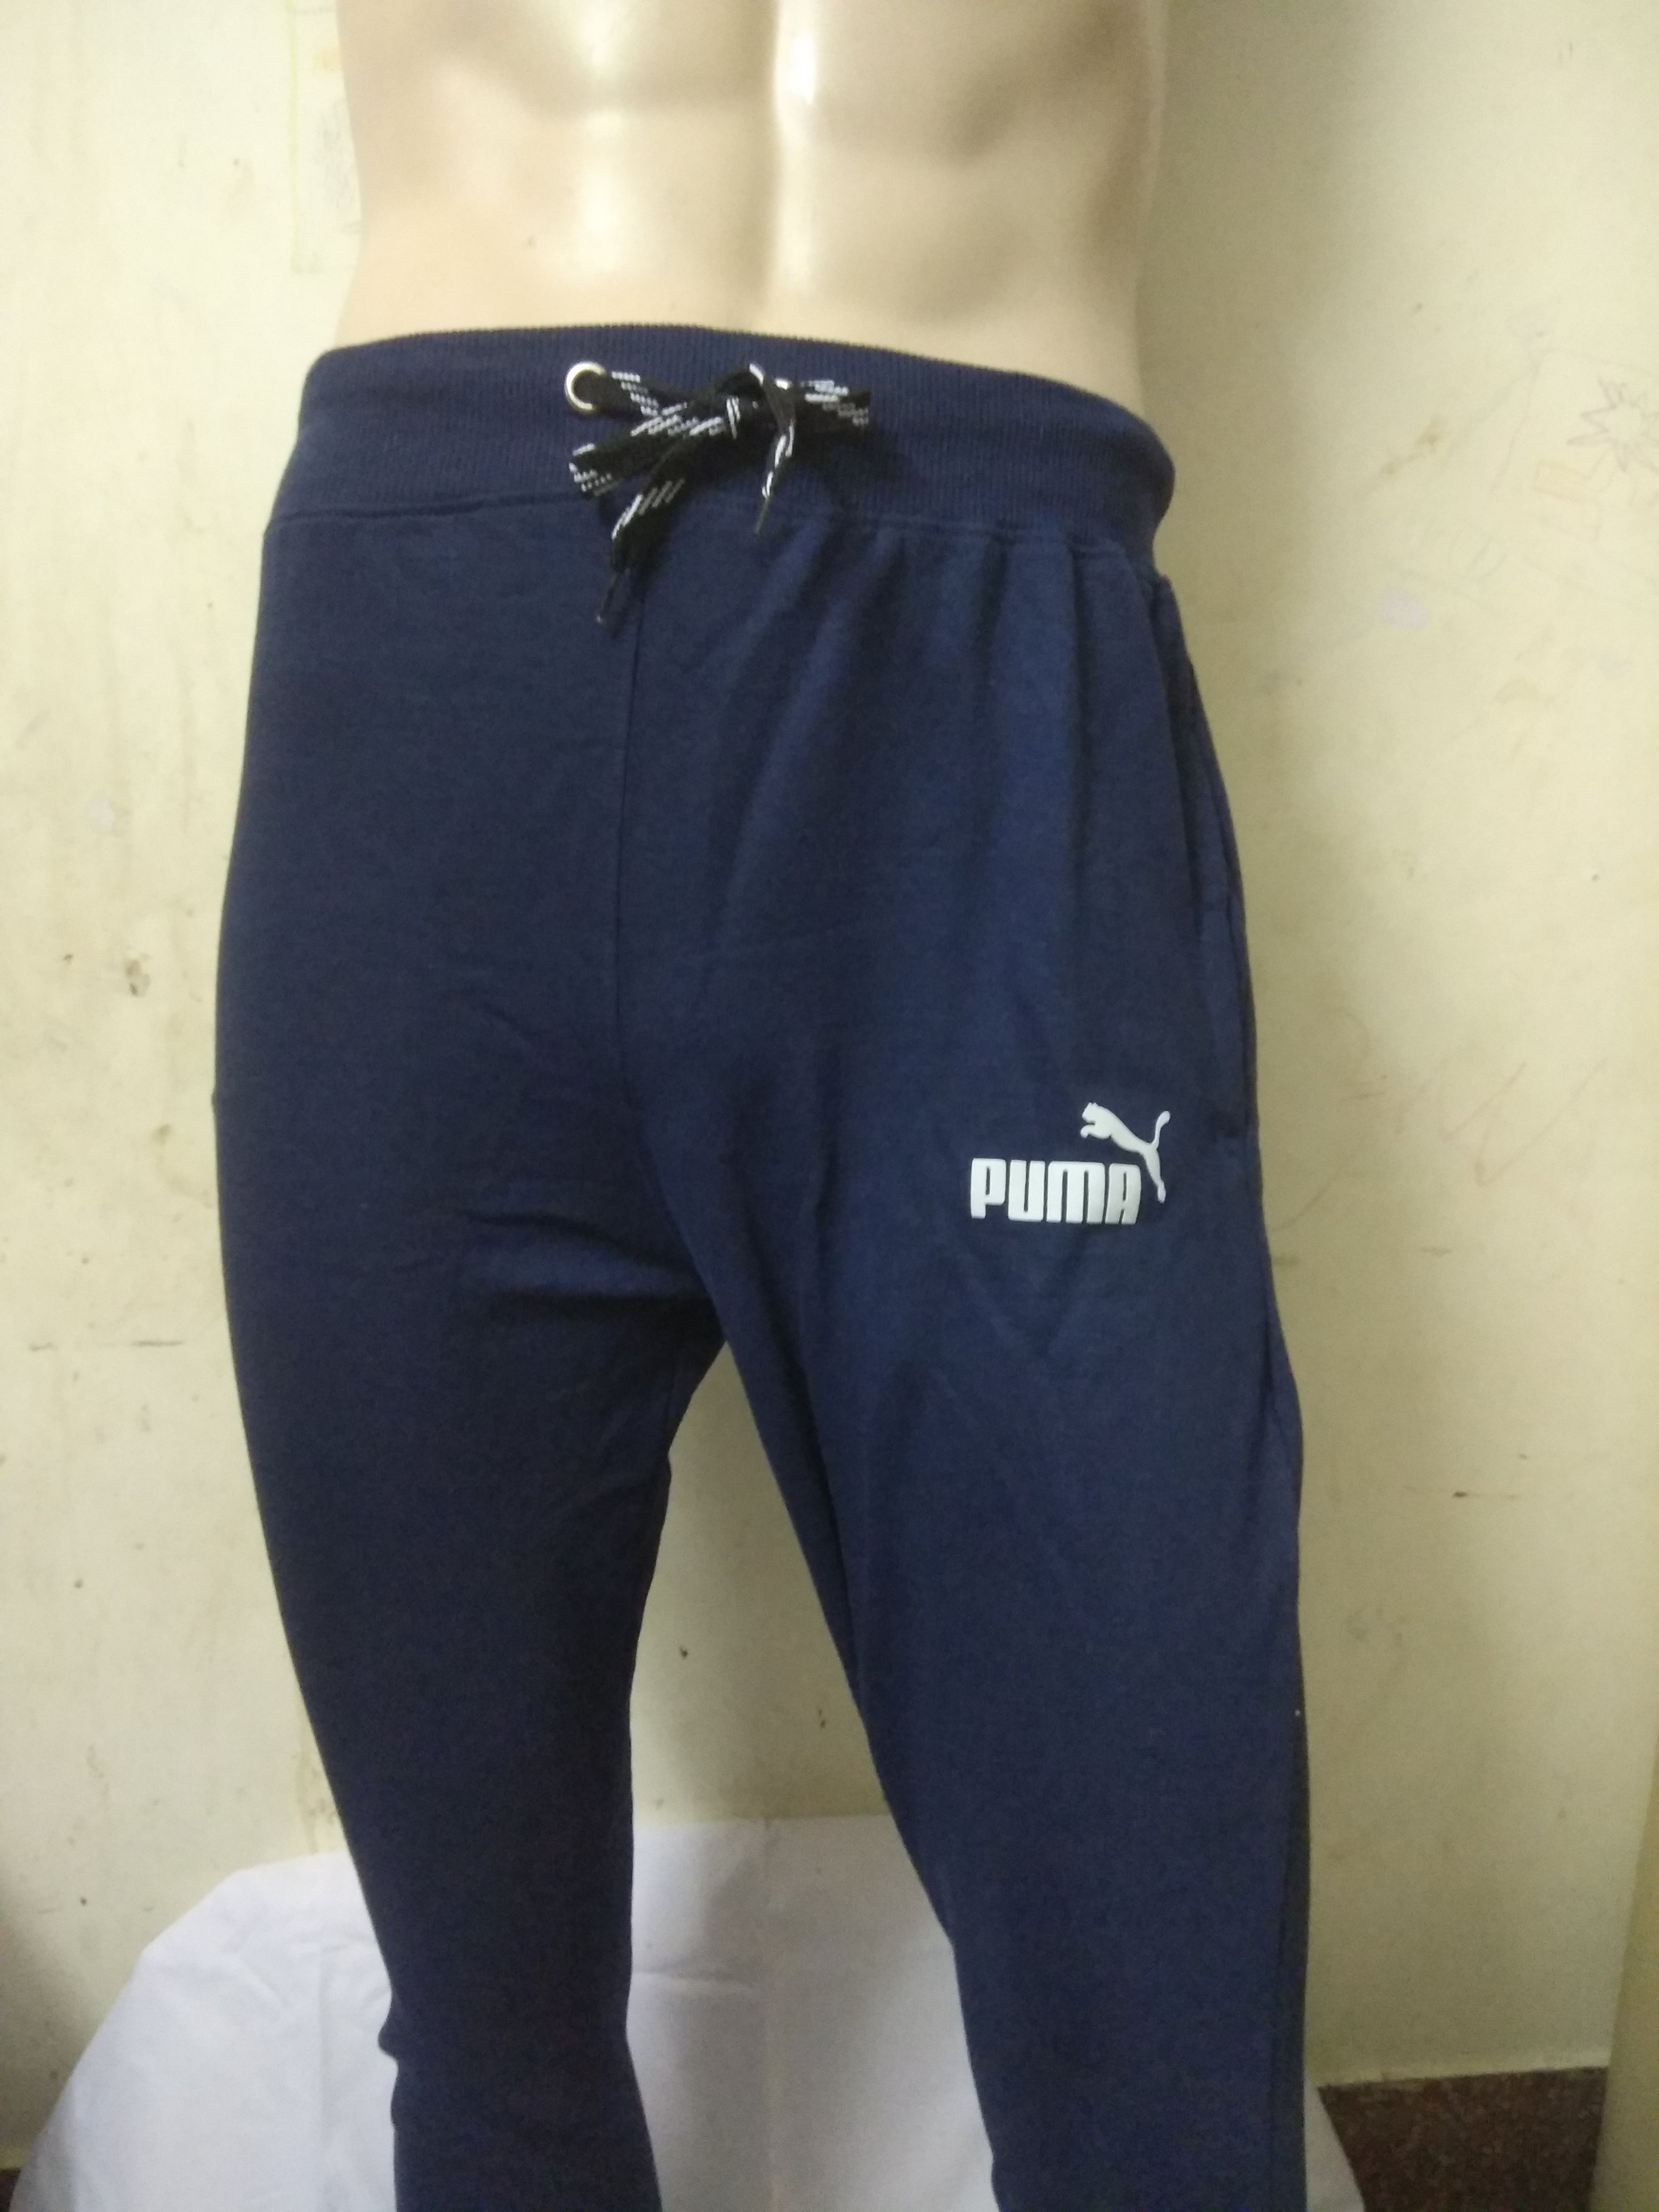 Puma Men's Velour T7 Track Pants 539675 01 Cotton Black - BRAND NEW | eBay